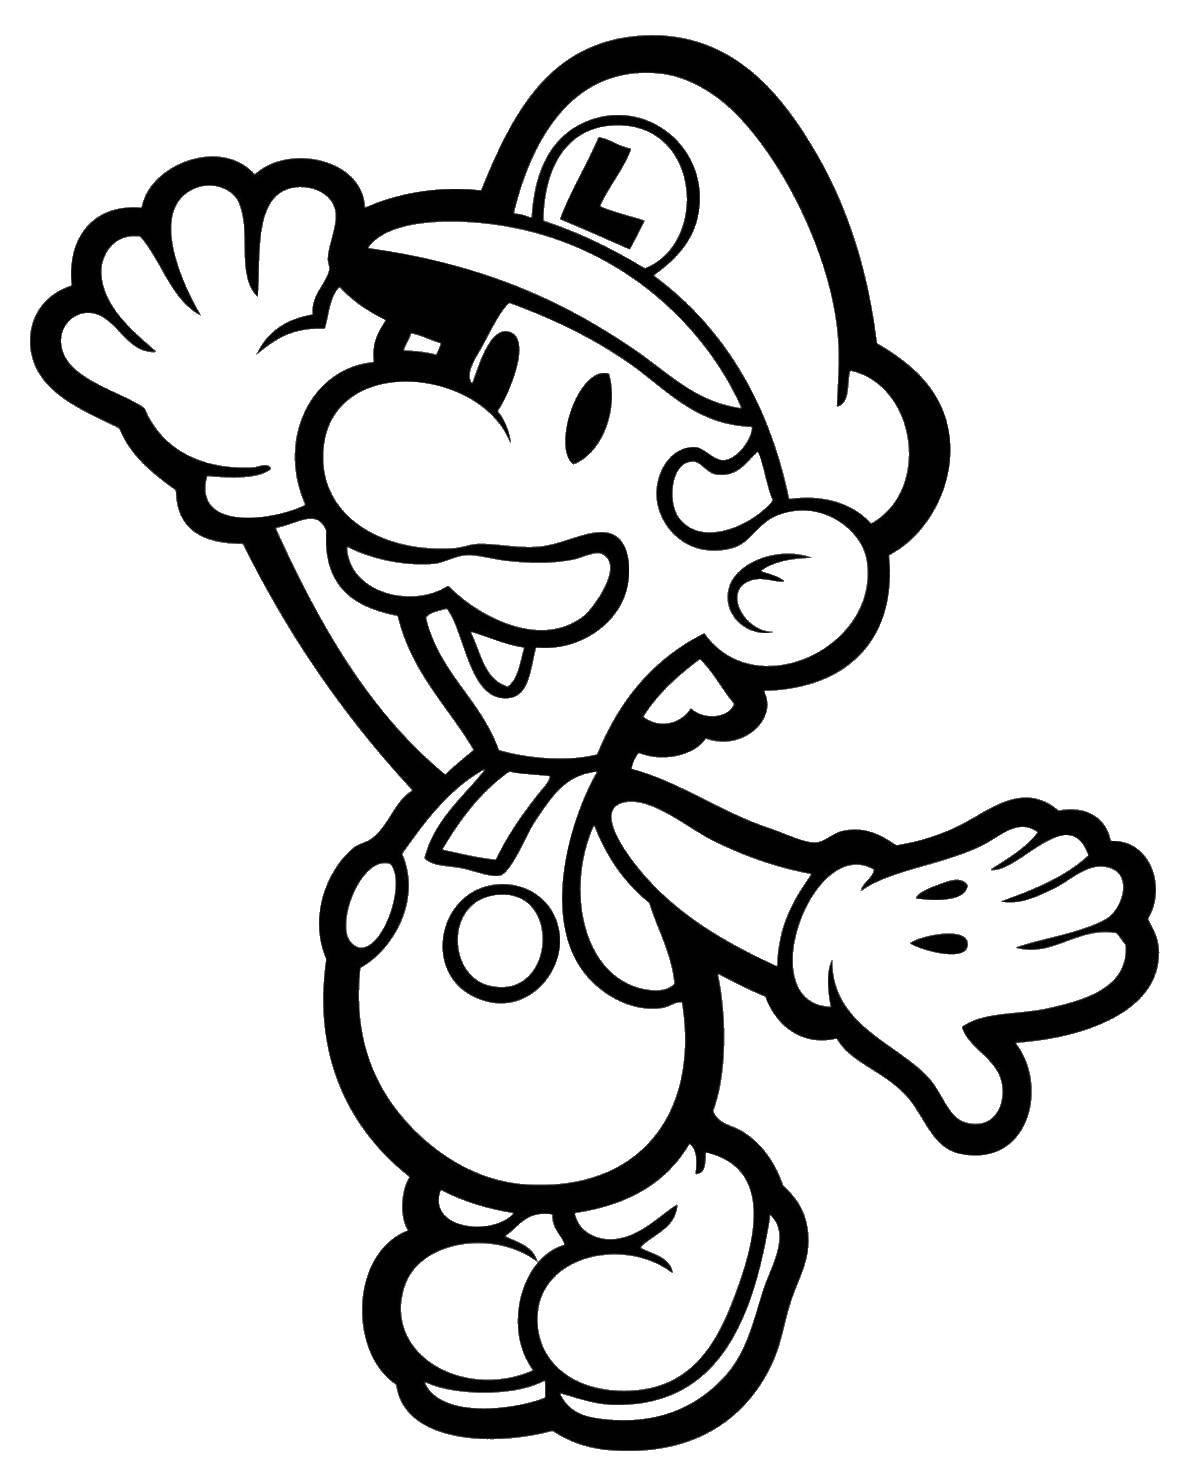 Coloring Luigi. Category games. Tags:  Games, Mario.